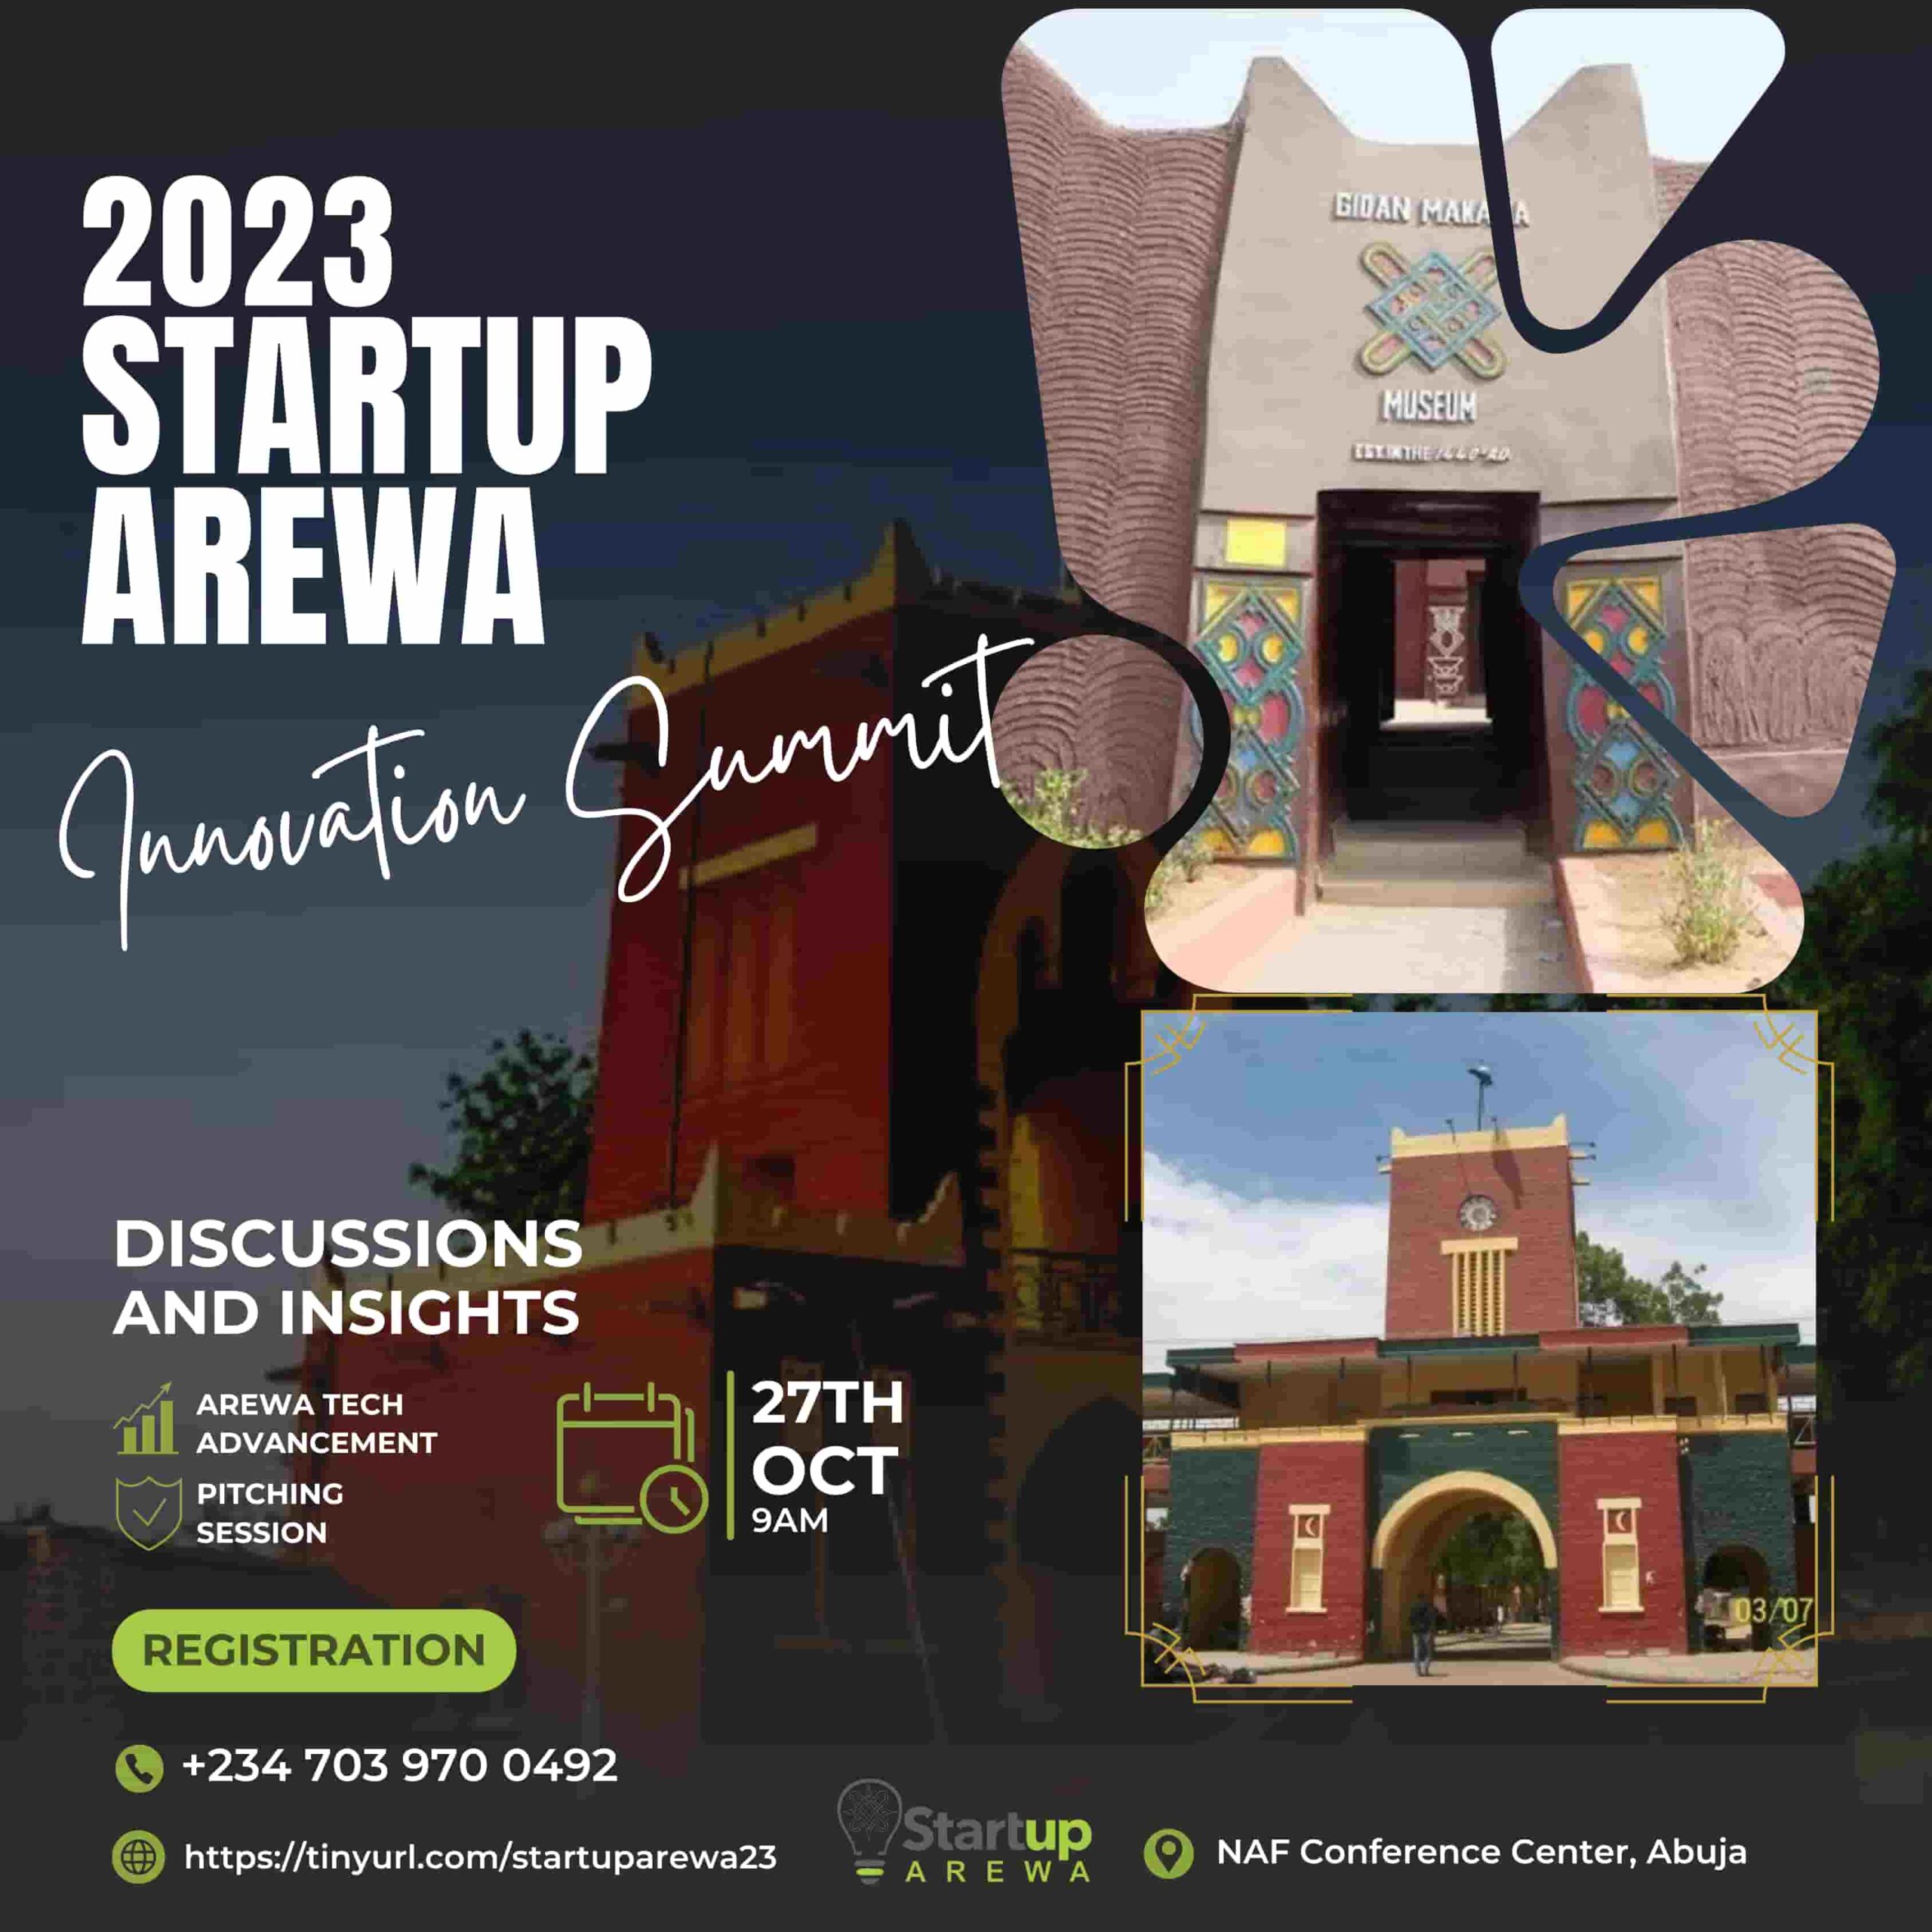 Start-Up Arewa Innovation Summit 2023